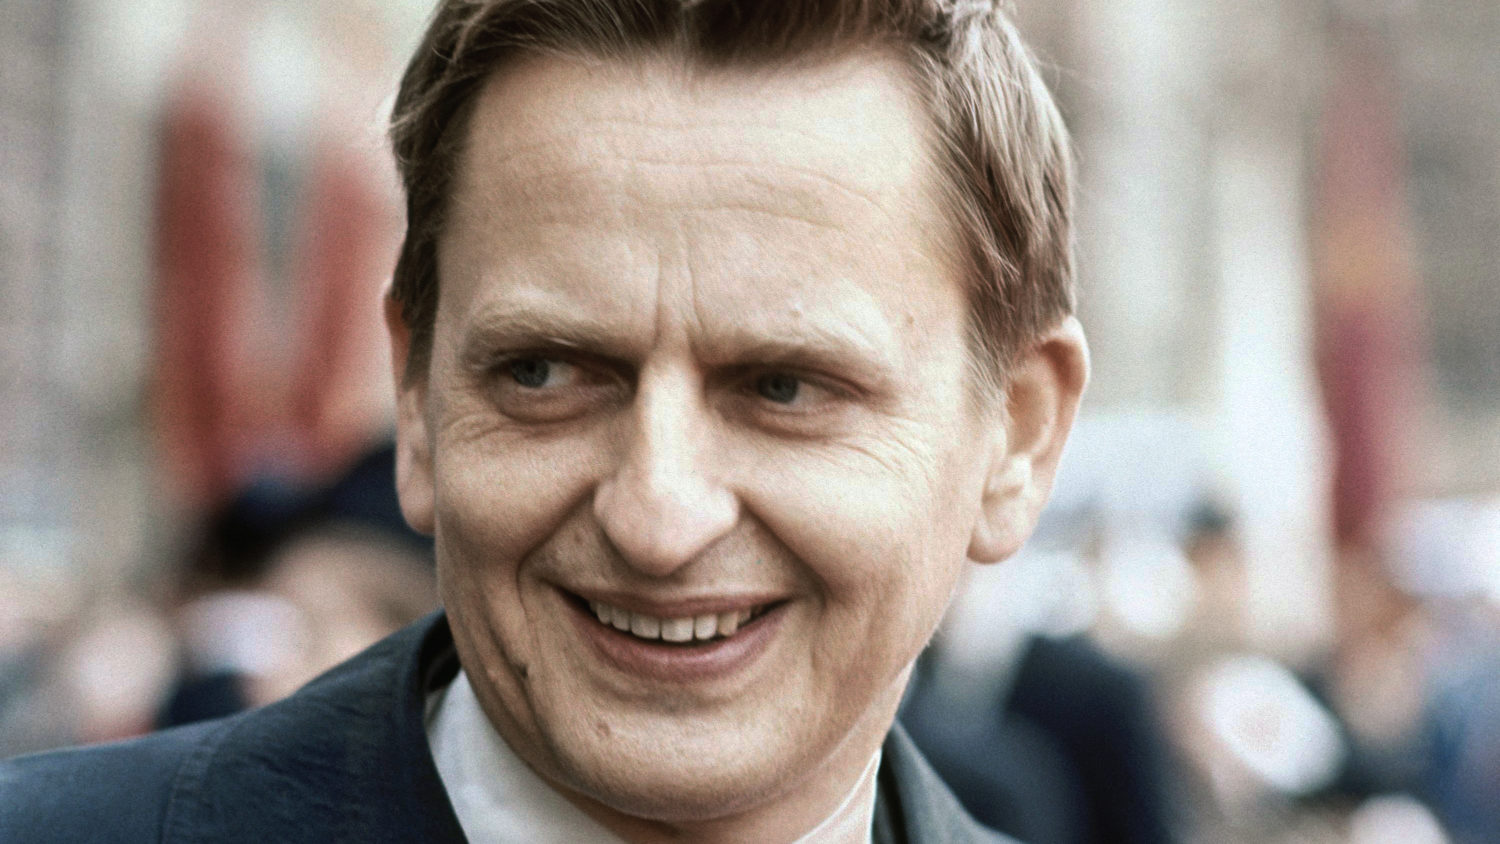 Case closed: Swedish prosecutor says man who killed himself in 2000 assassinated Olof Palme